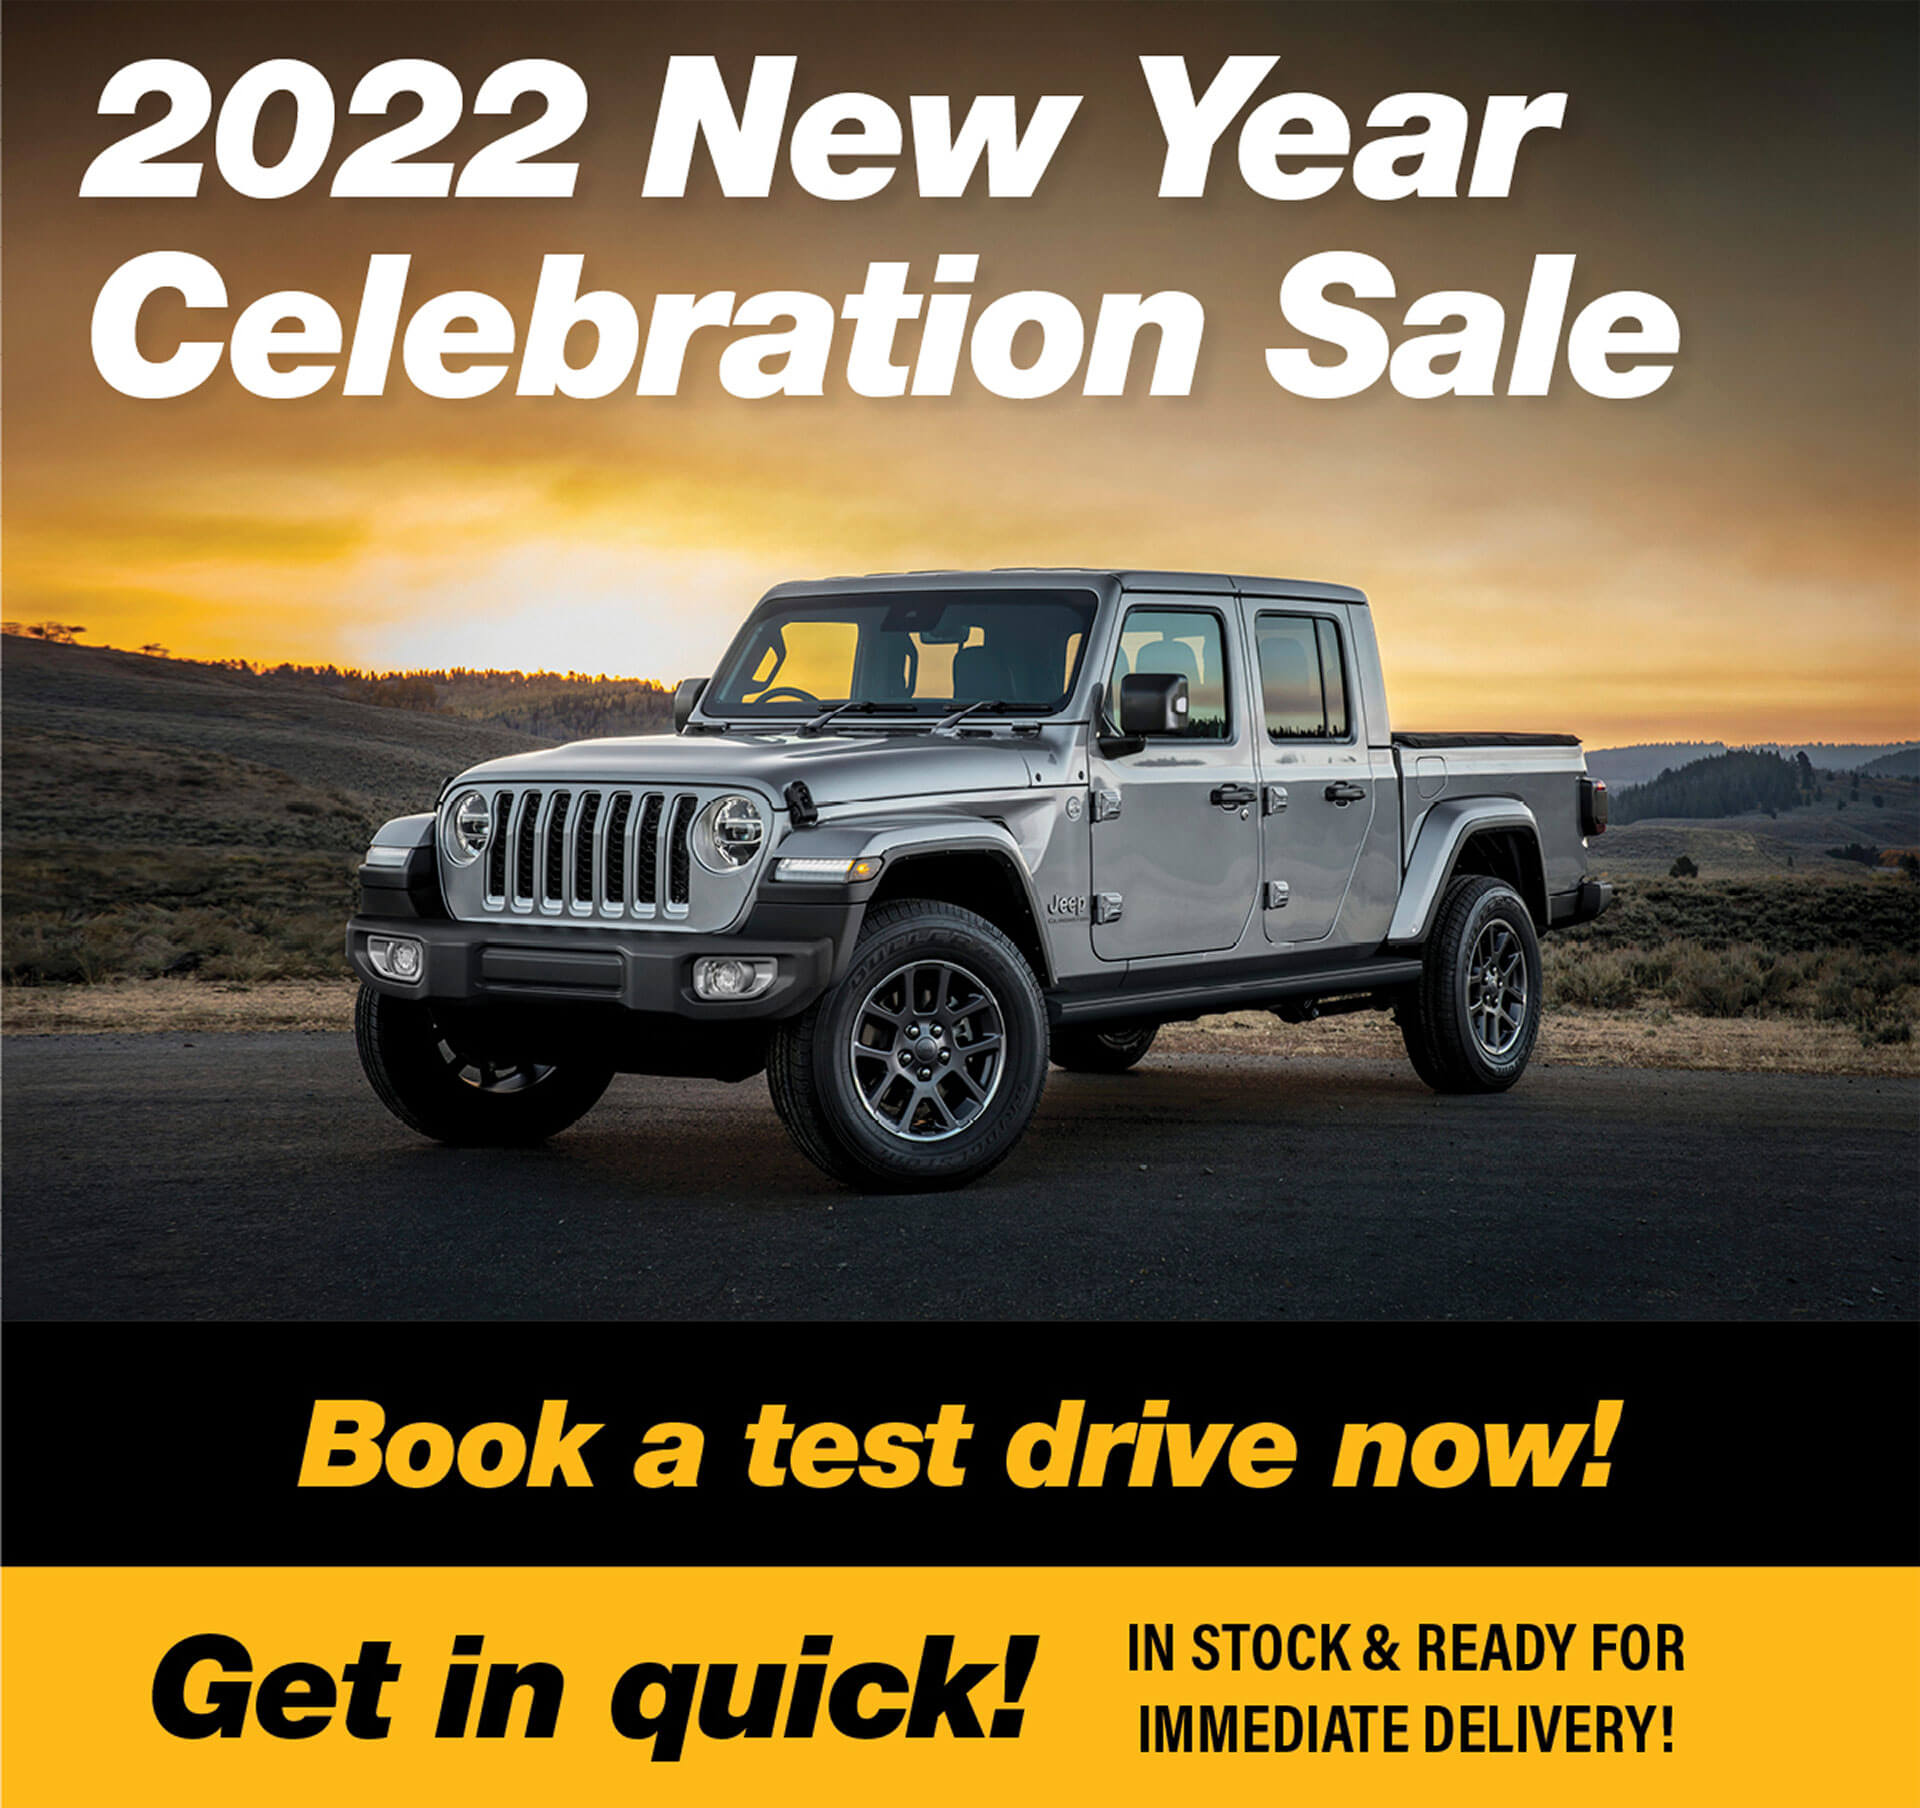 2022 New Year Celebration Sale at Caroline Springs Jeep